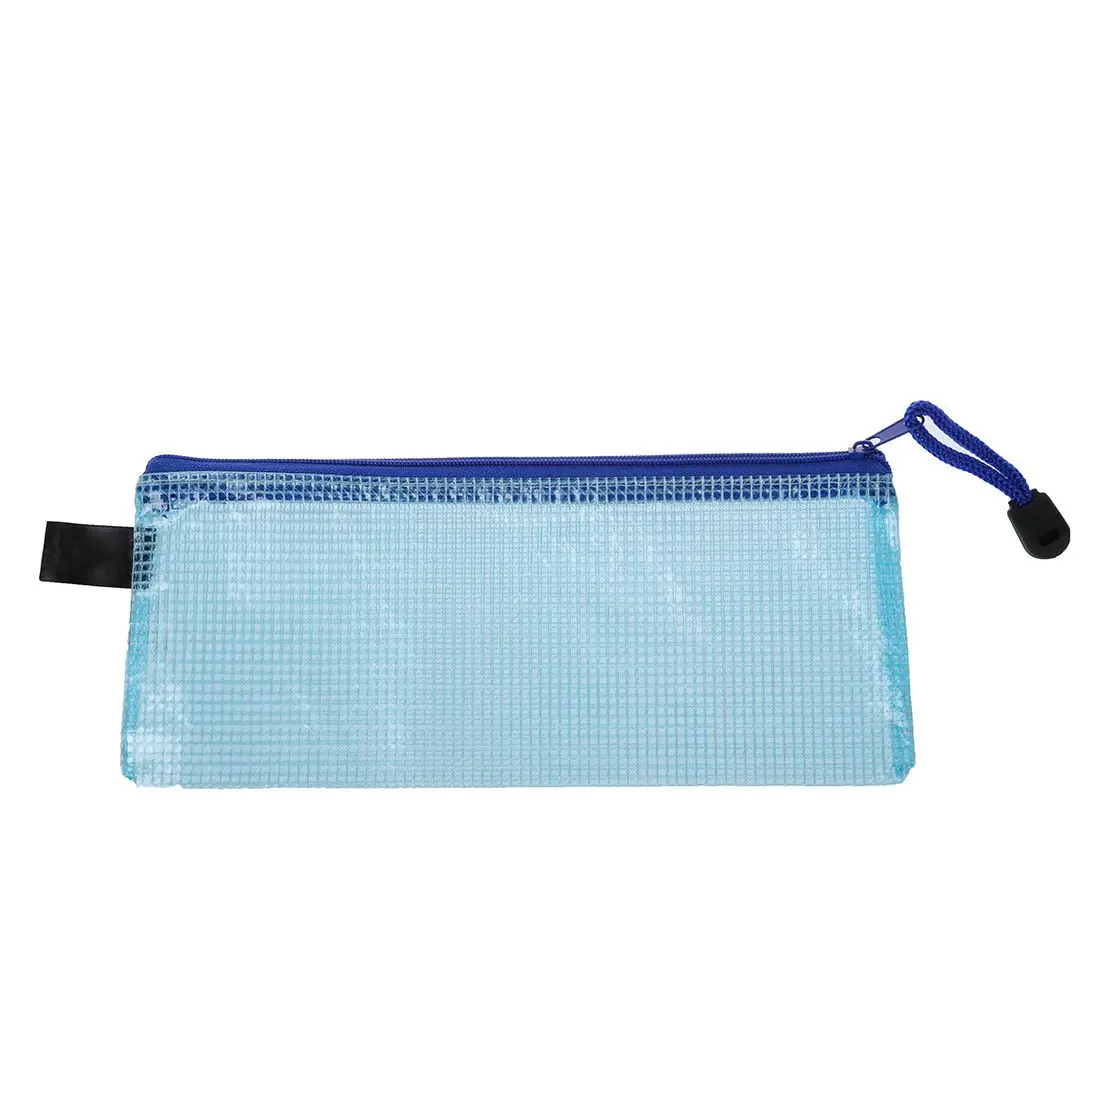 Сетка Дизайн синий на молнии Синтетическое закрытие волос мягкий ПВХ Канцелярские сумка